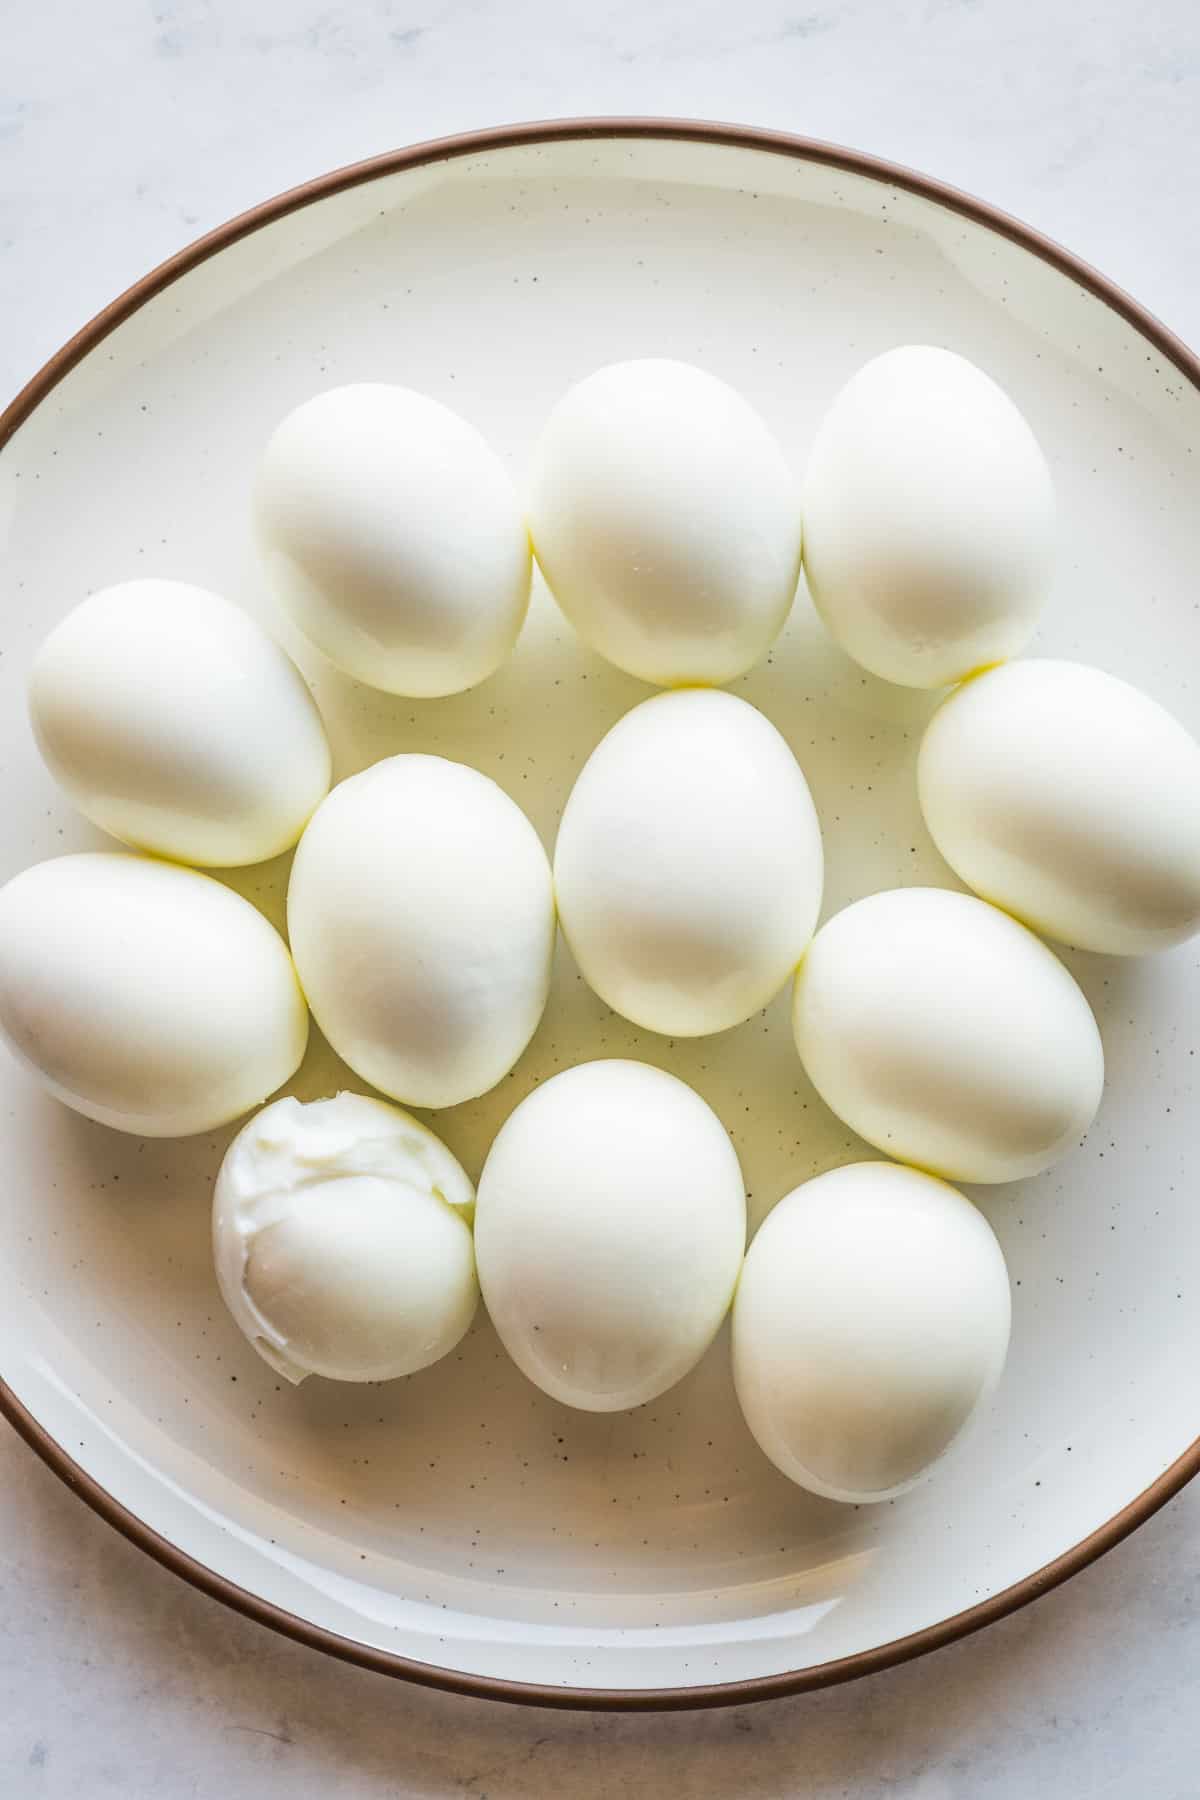 Peeled hard boiled eggs on a plate.